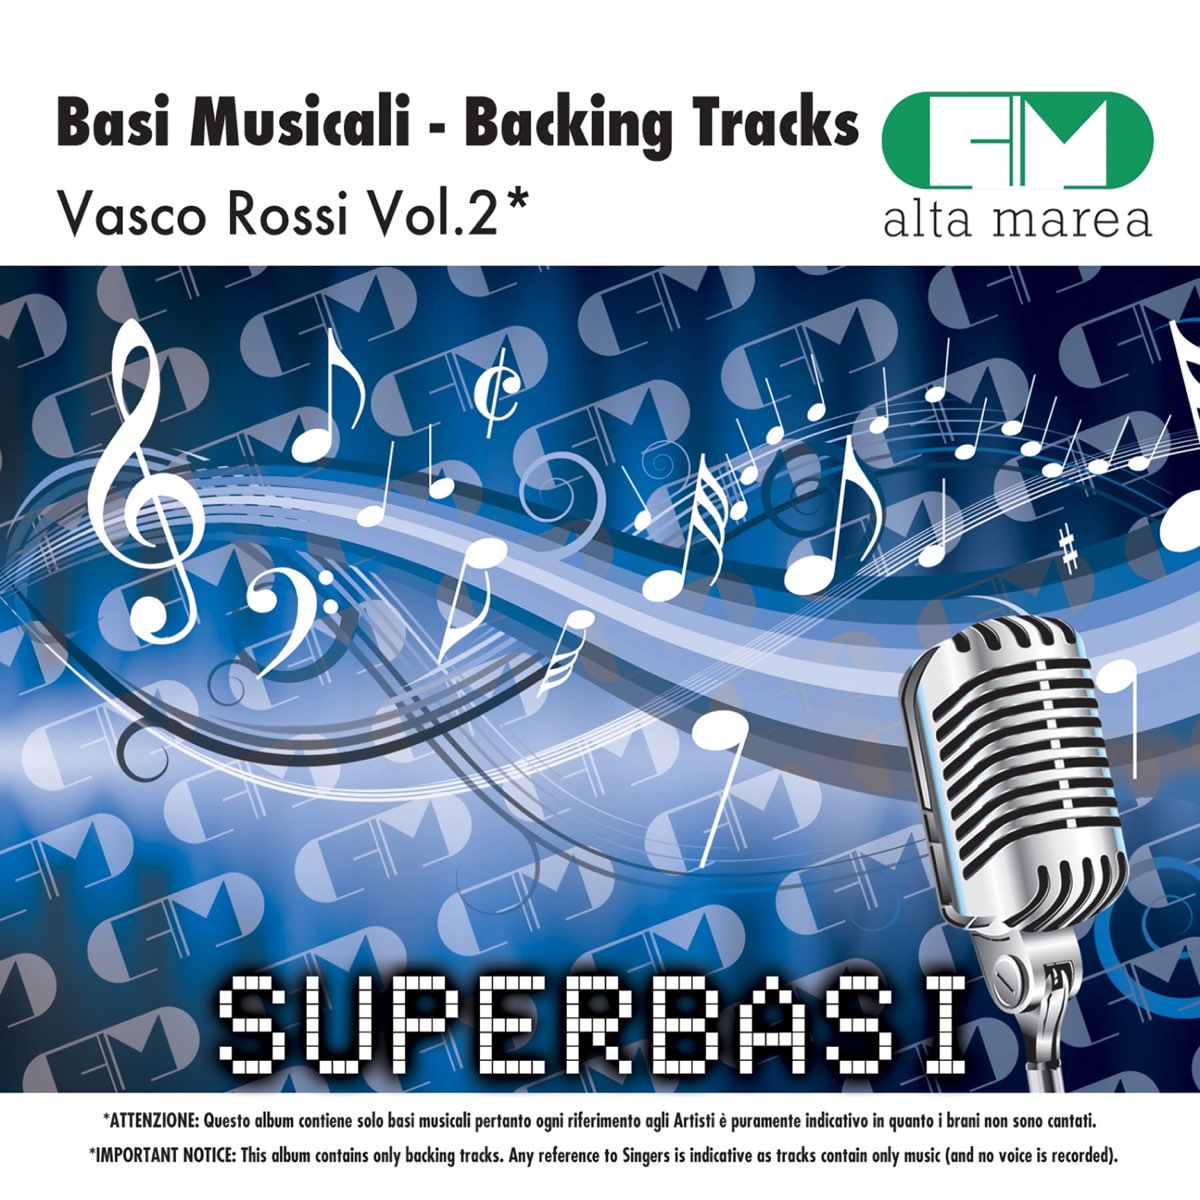 Basi Musicali: Vasco Rossi, Vol. 2 (Backing Tracks) - Album by Alta Marea -  Apple Music